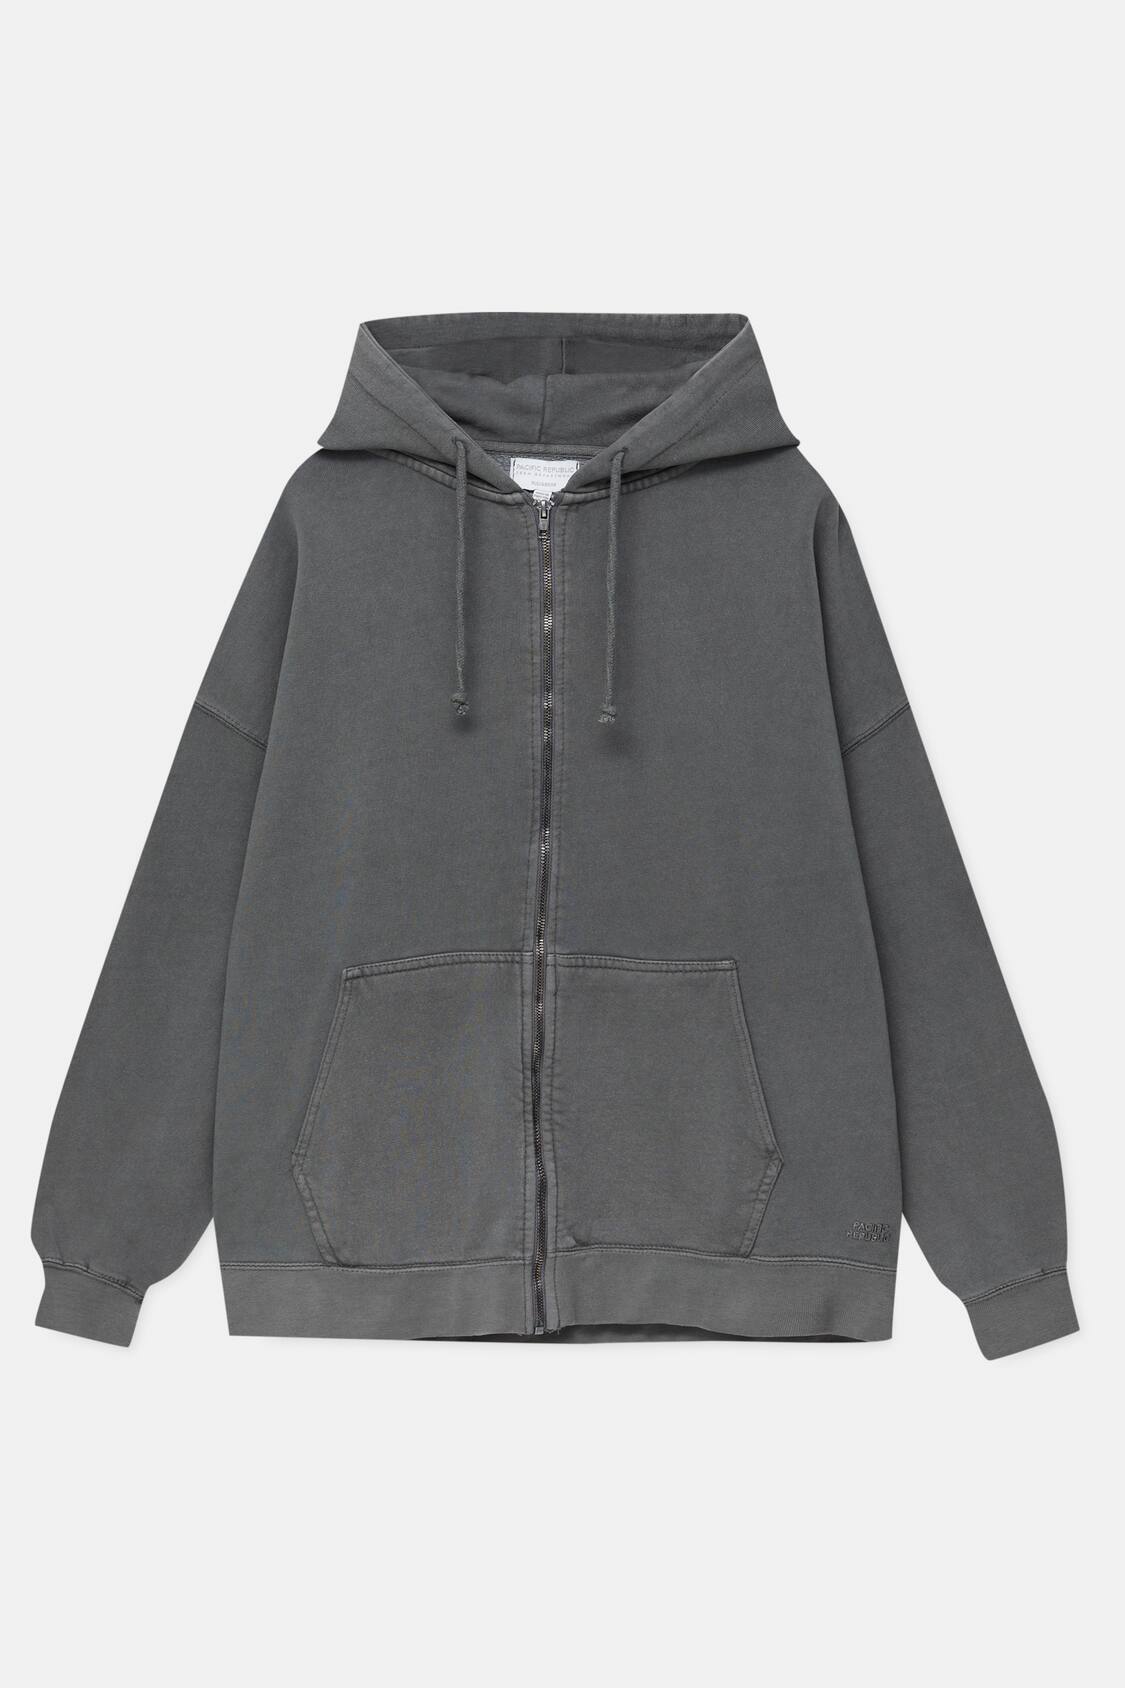 Oversize sweatshirt with zipper